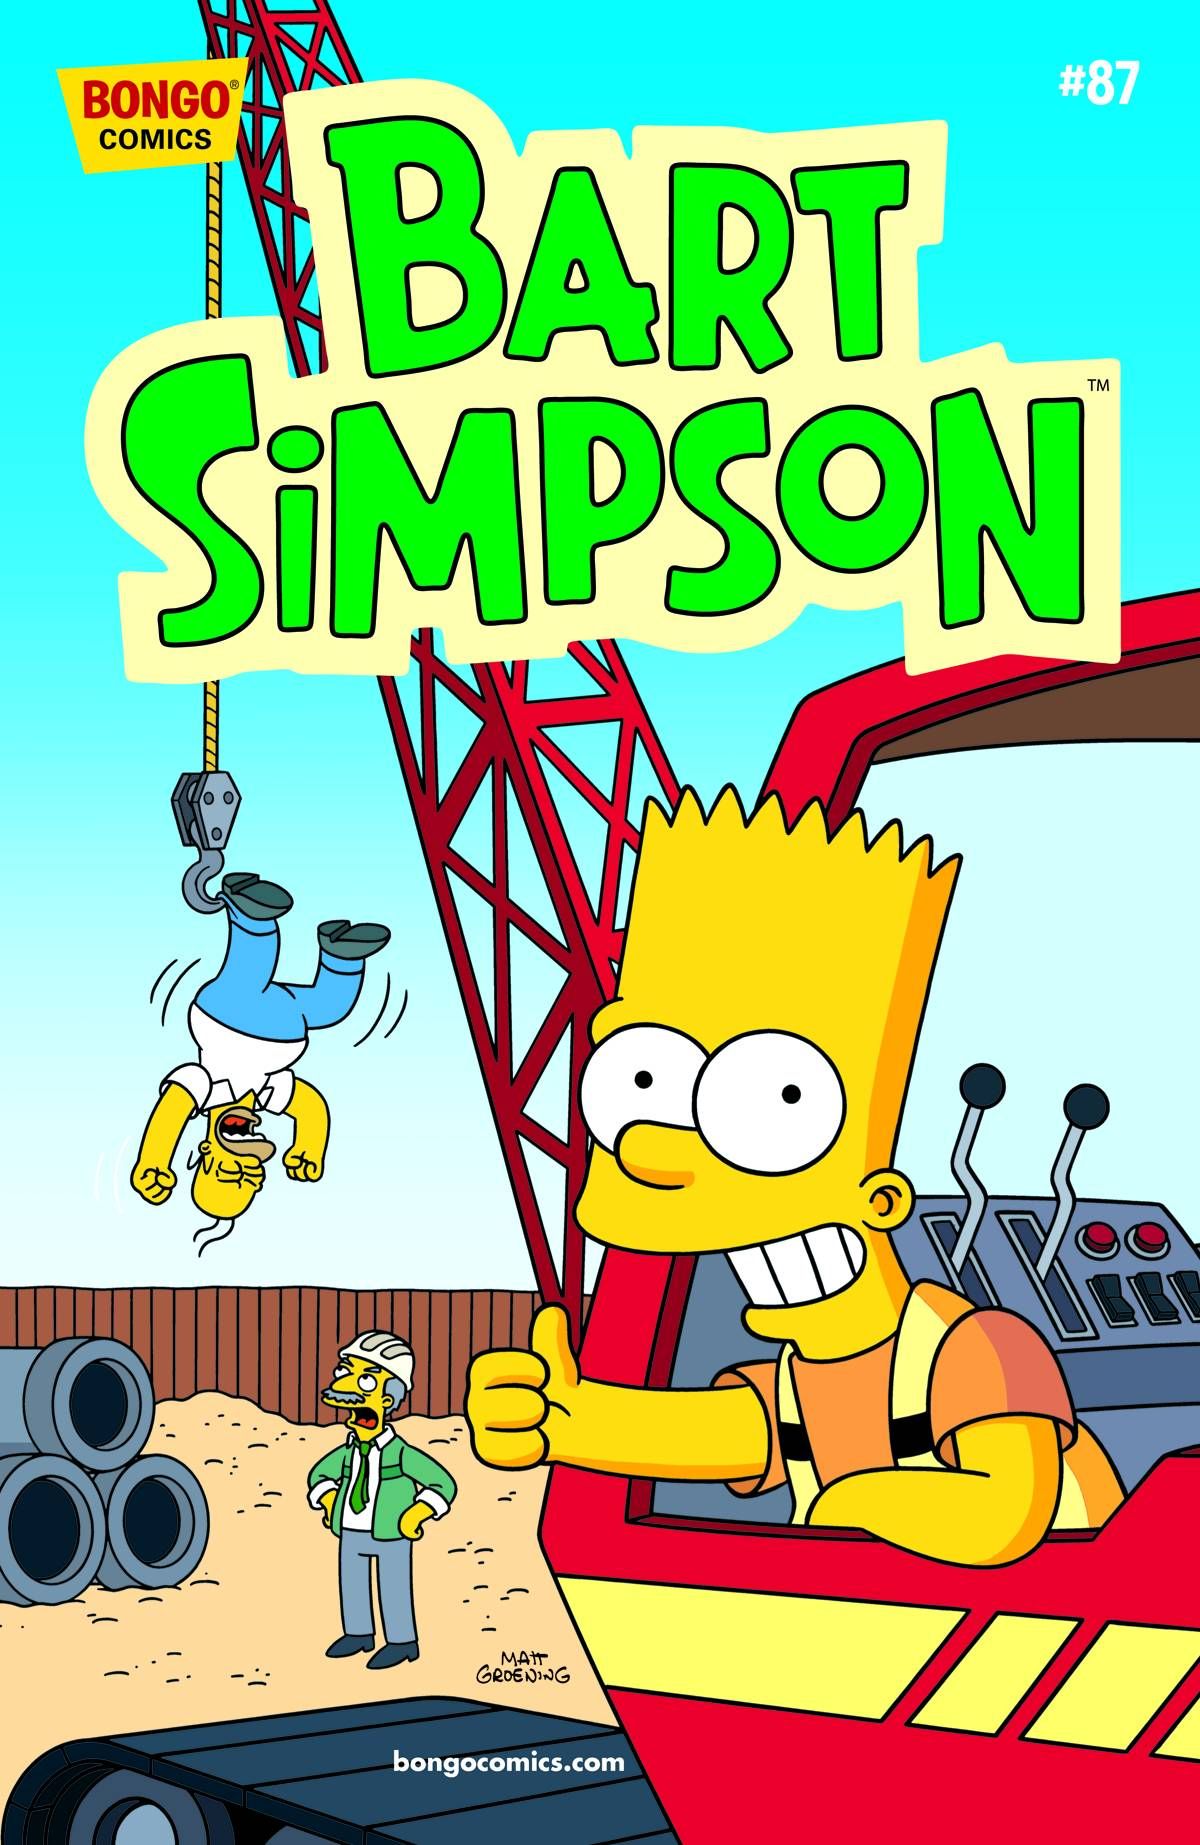 Simpsons Comics Presents Bart Simpson #87 Comic